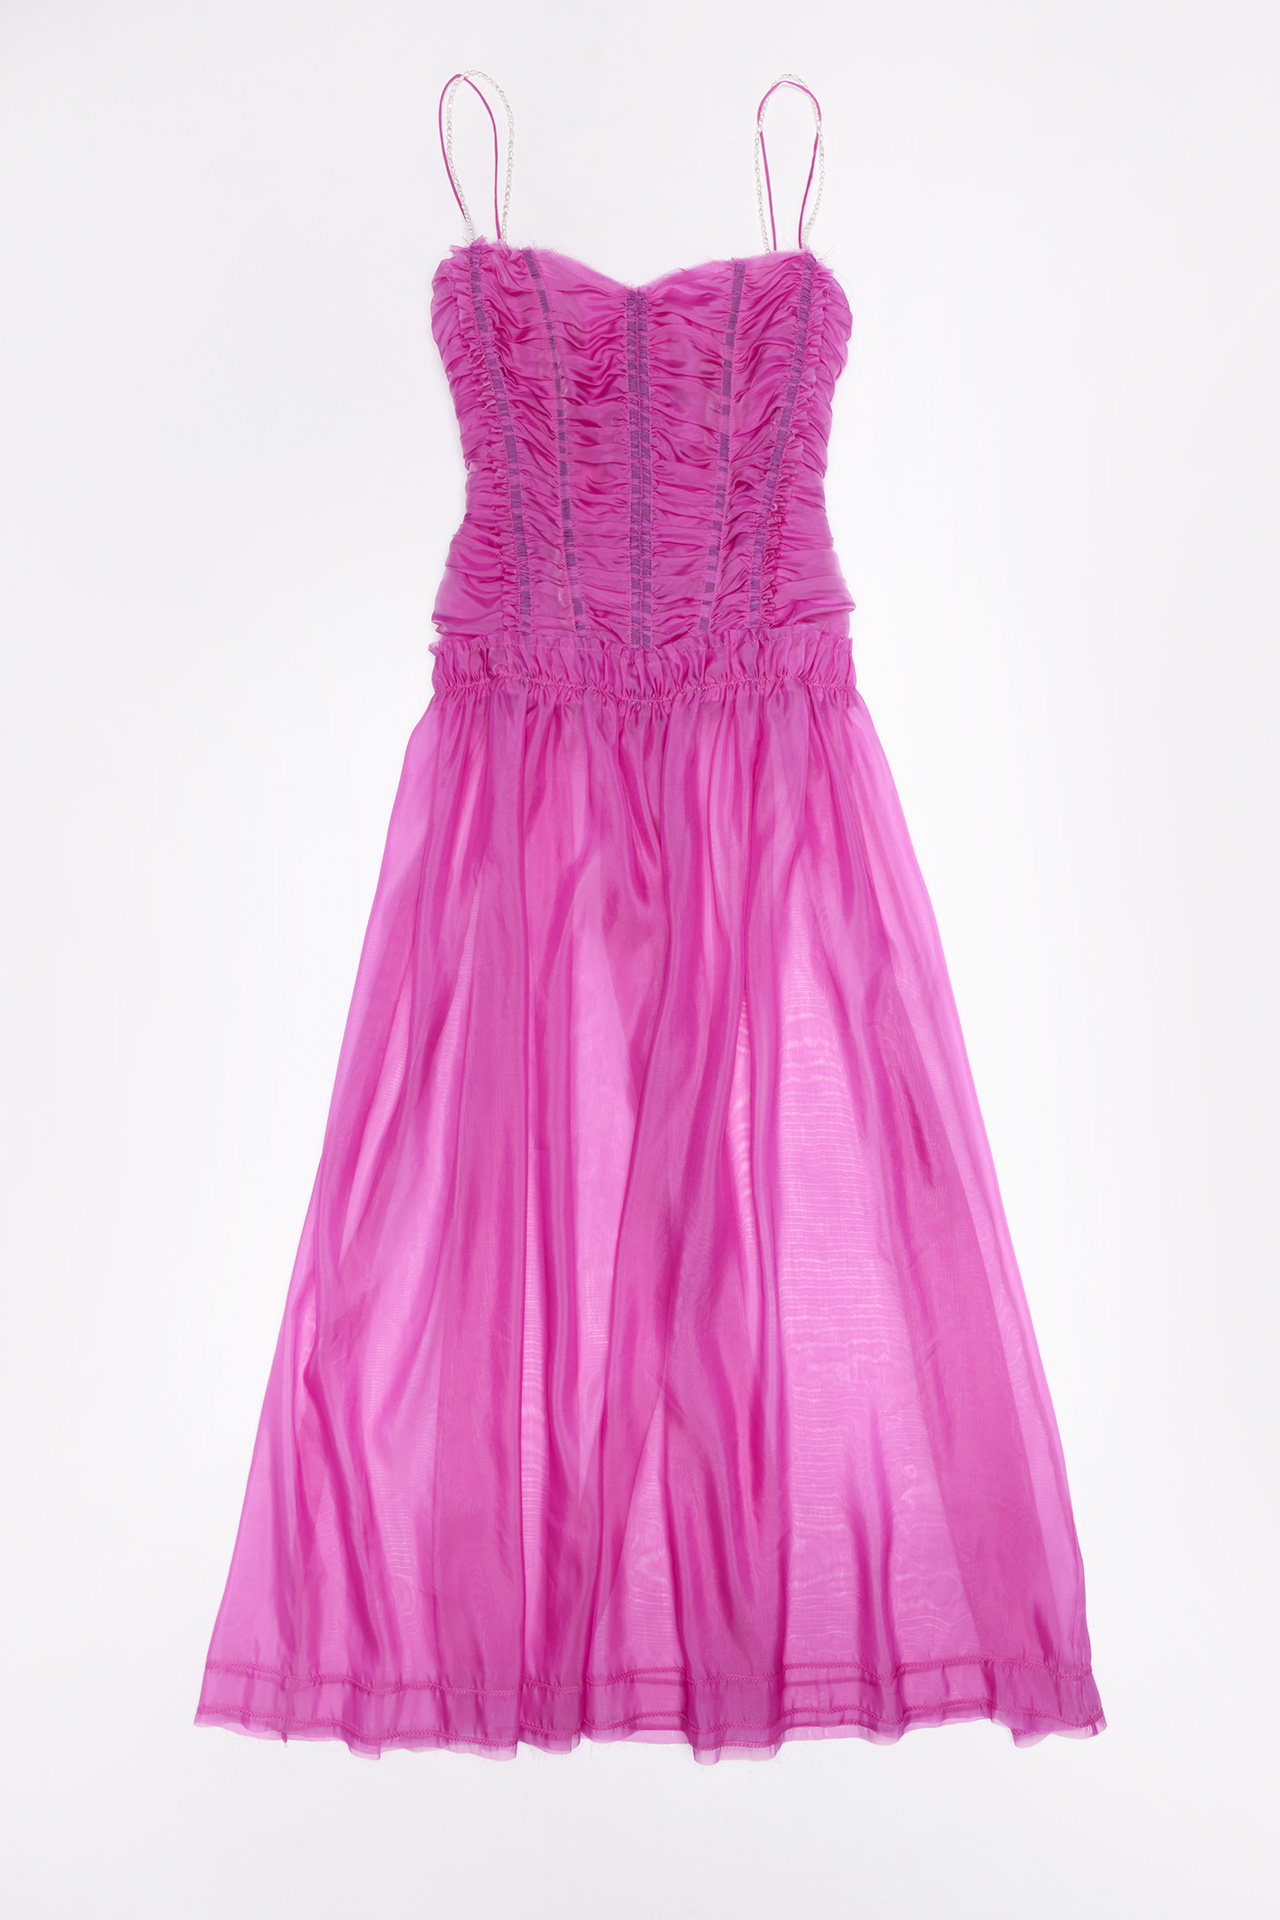 Made | Spain Franca Pink | Dress Europe in Miista